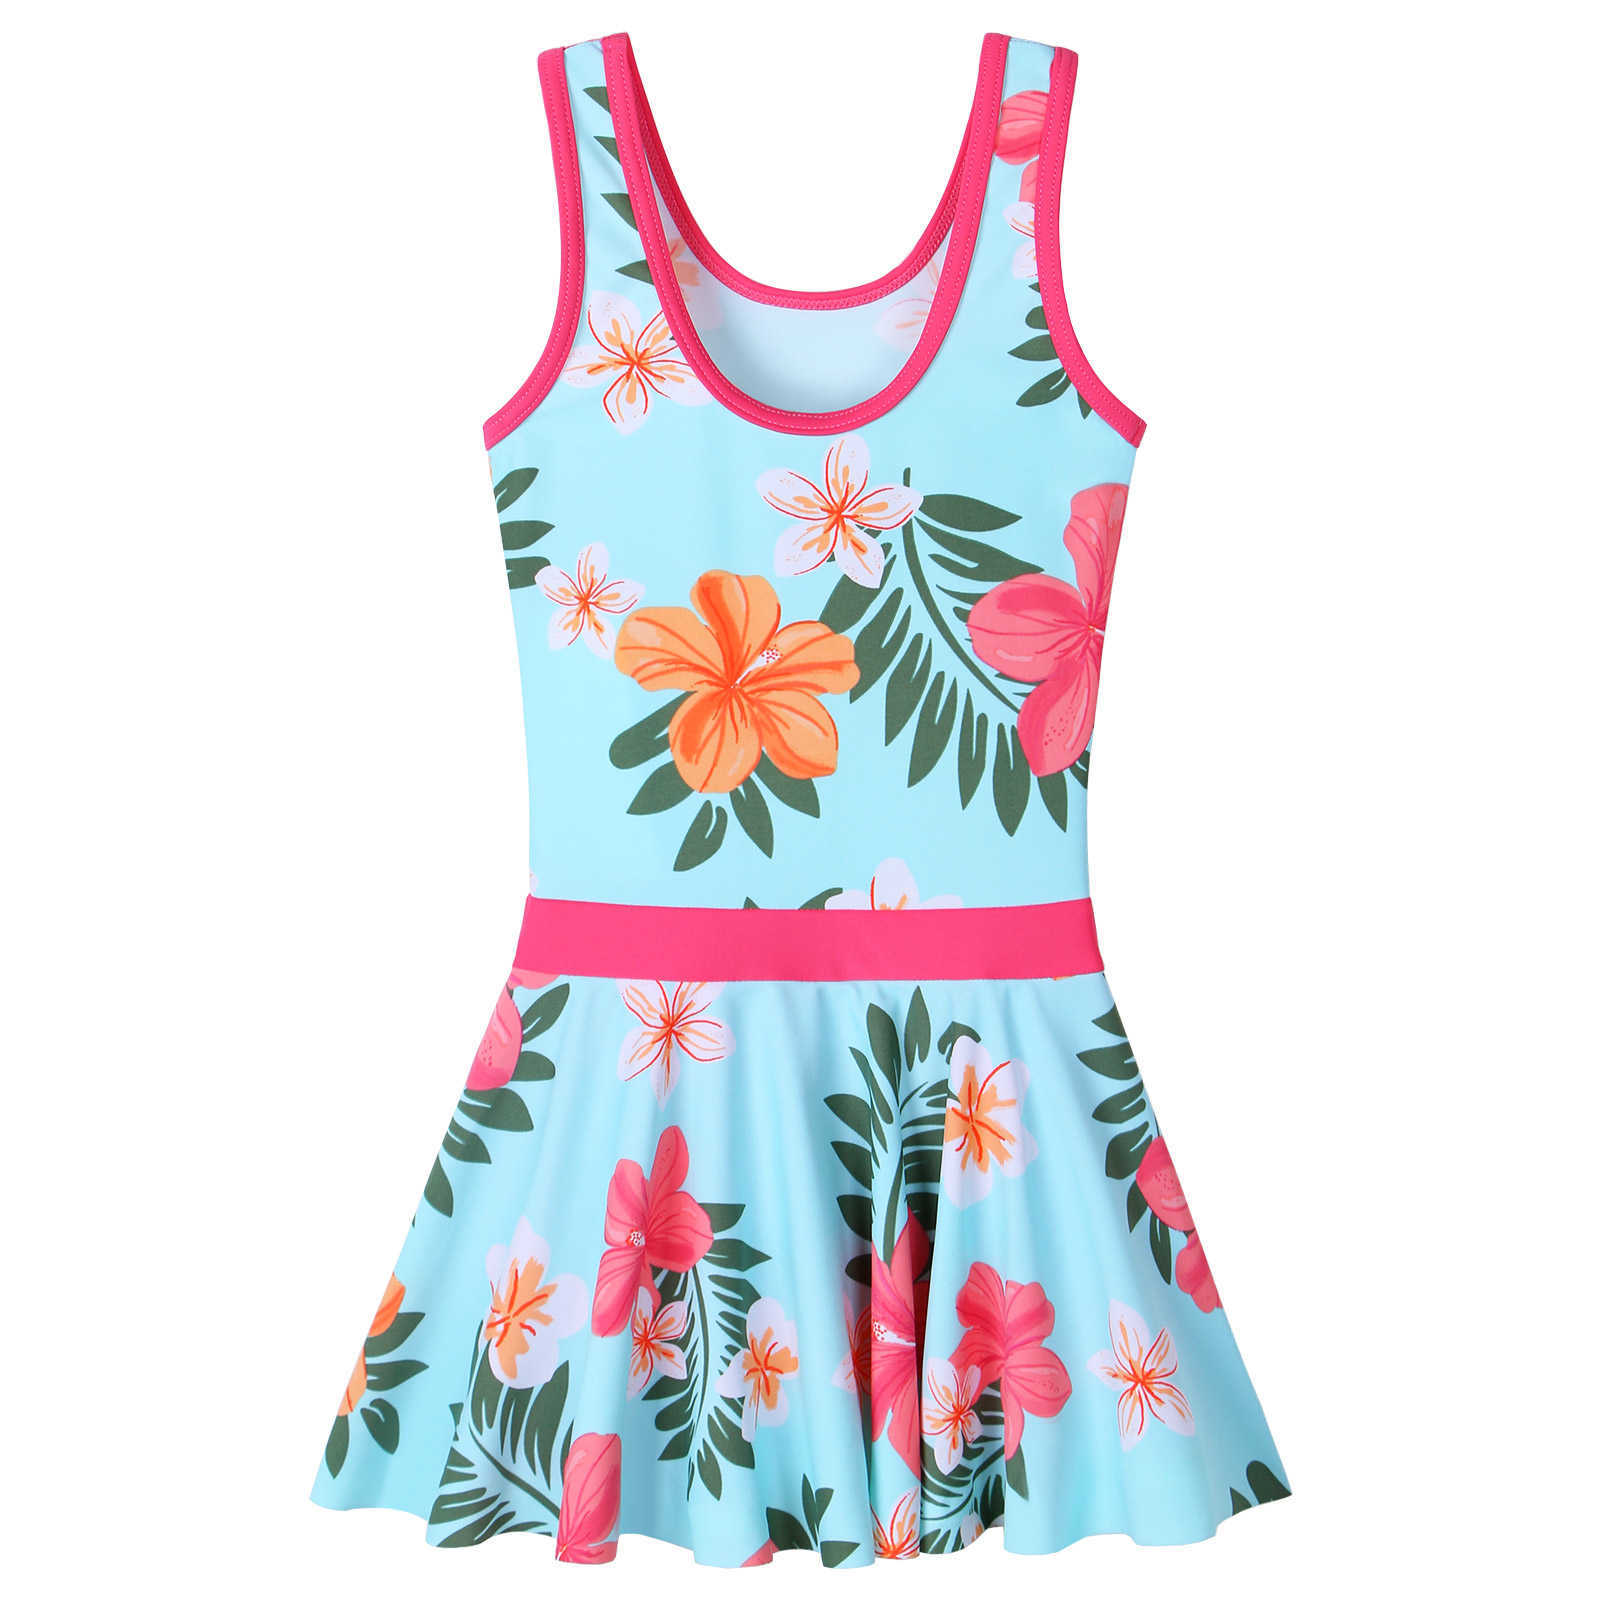 One-Pieces BAOHULU Girls Summer Swimsuit Kids Sleeveless Water Sport Clothes Children Cyan Flower Print Rashguard Bathing Suit New Arrive